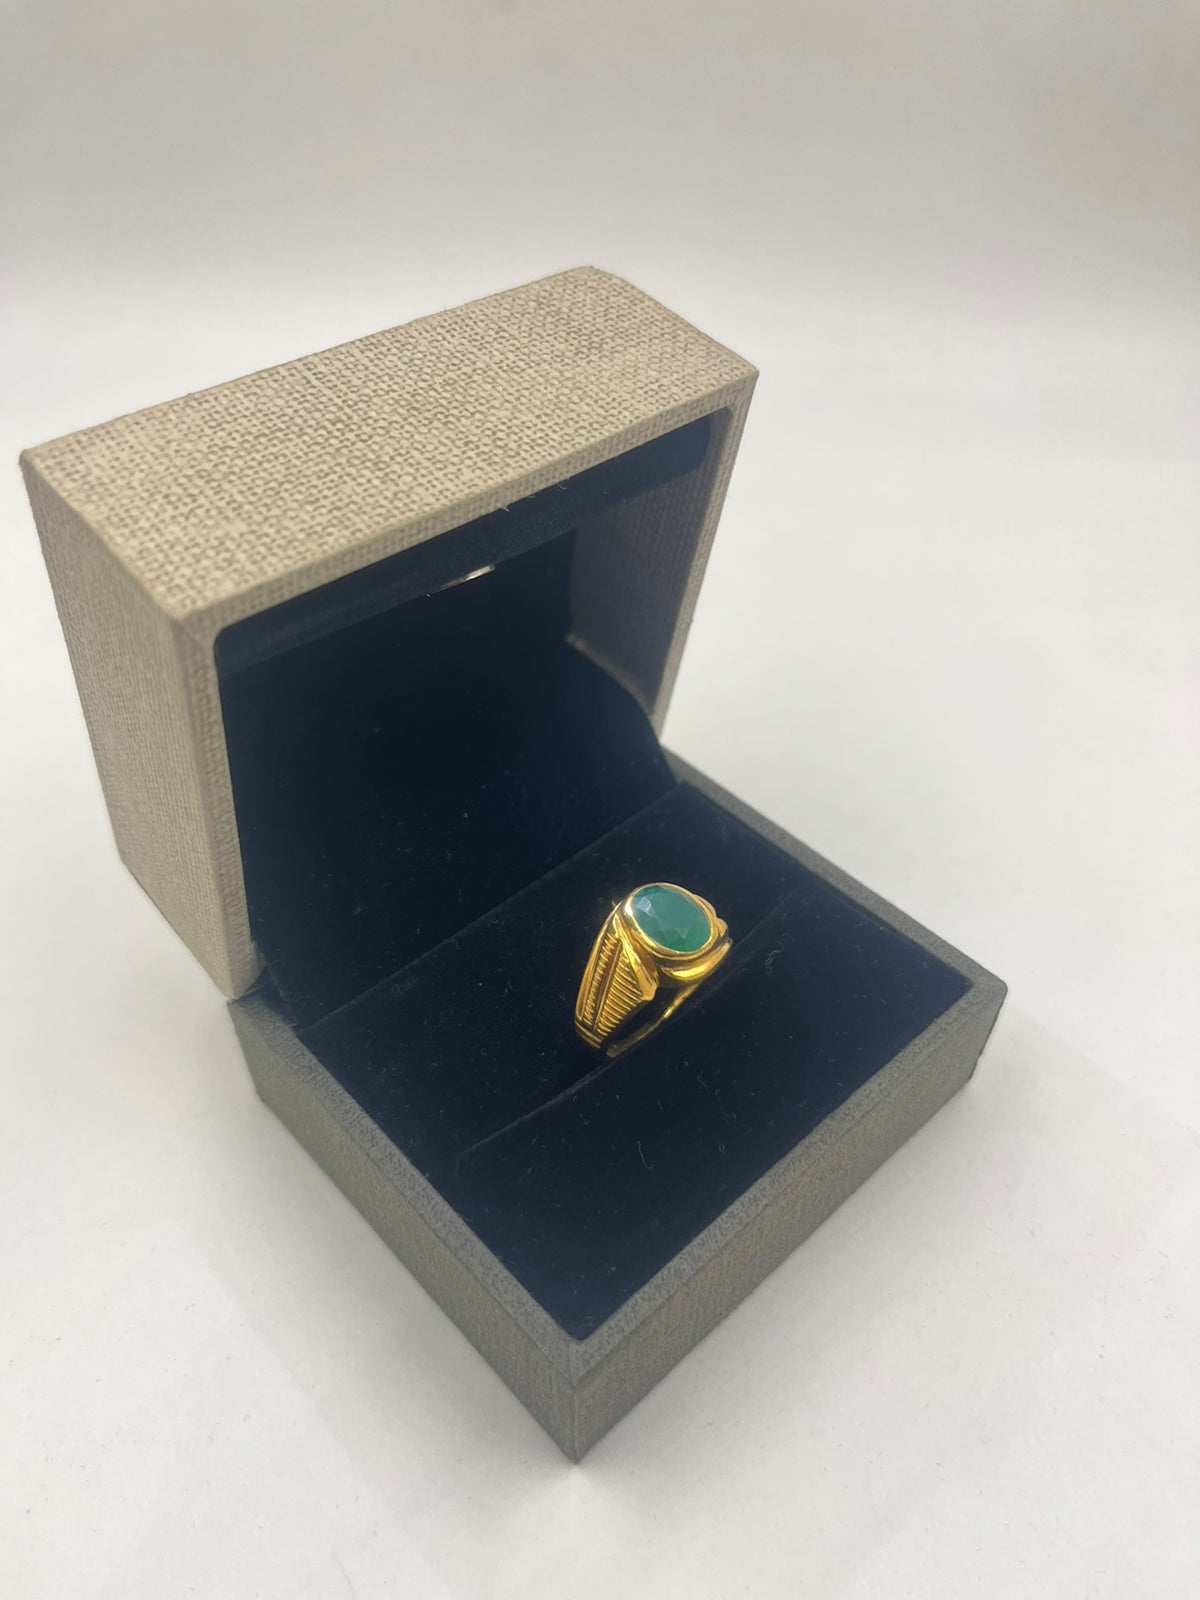 LMDPRAJAPATIS 5.00 Ct Original Emerald Panna Gold Plated Anniversary  Wedding Ring For Men And women|Amazon.com